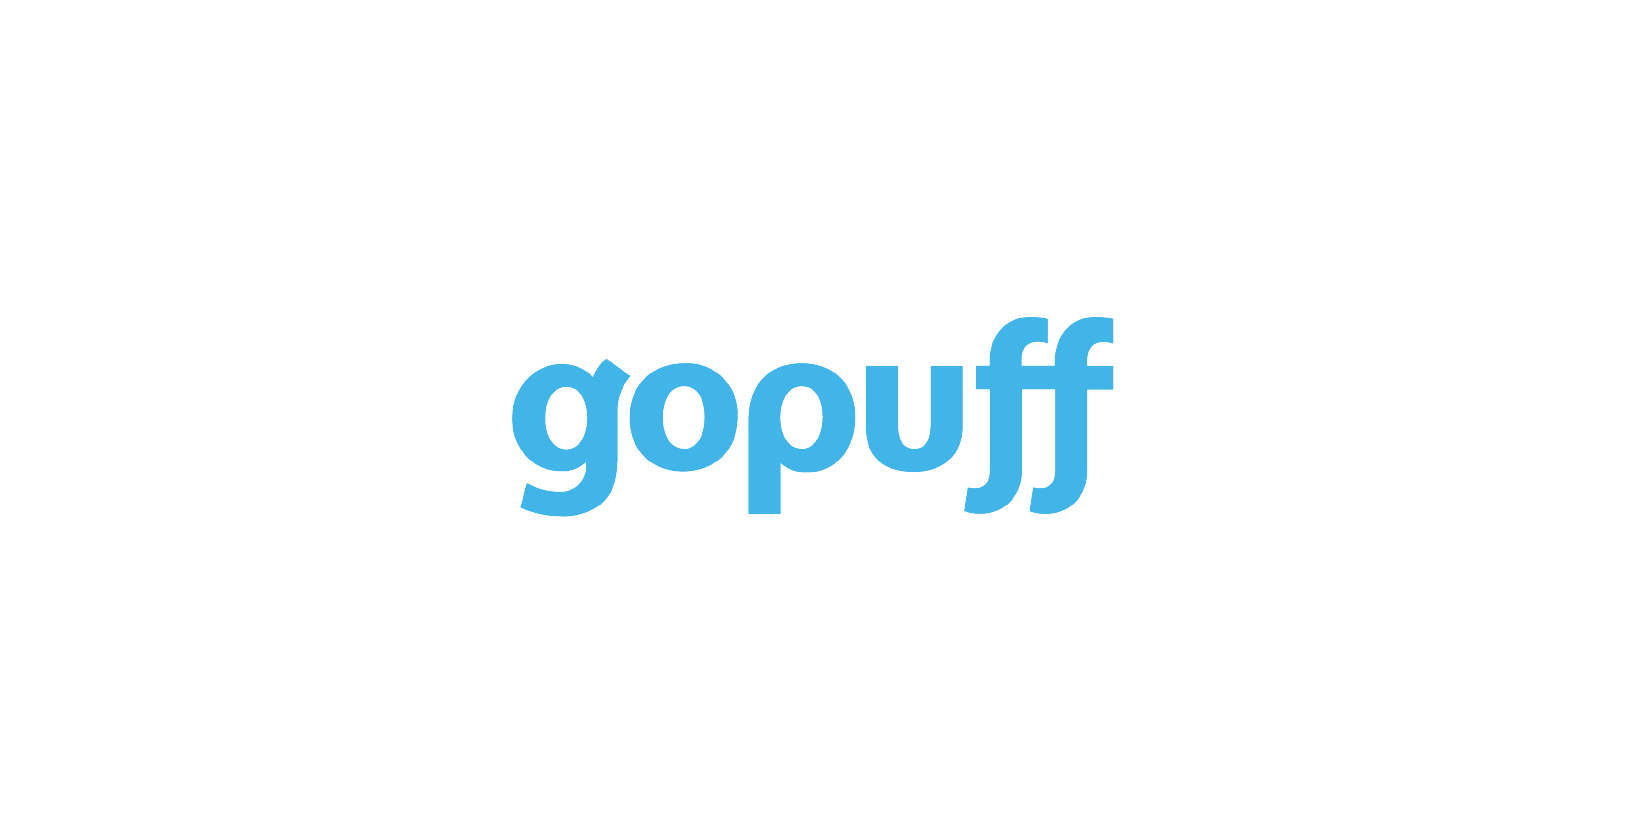 Vision Fund investment portfolio company GoPuff's logo